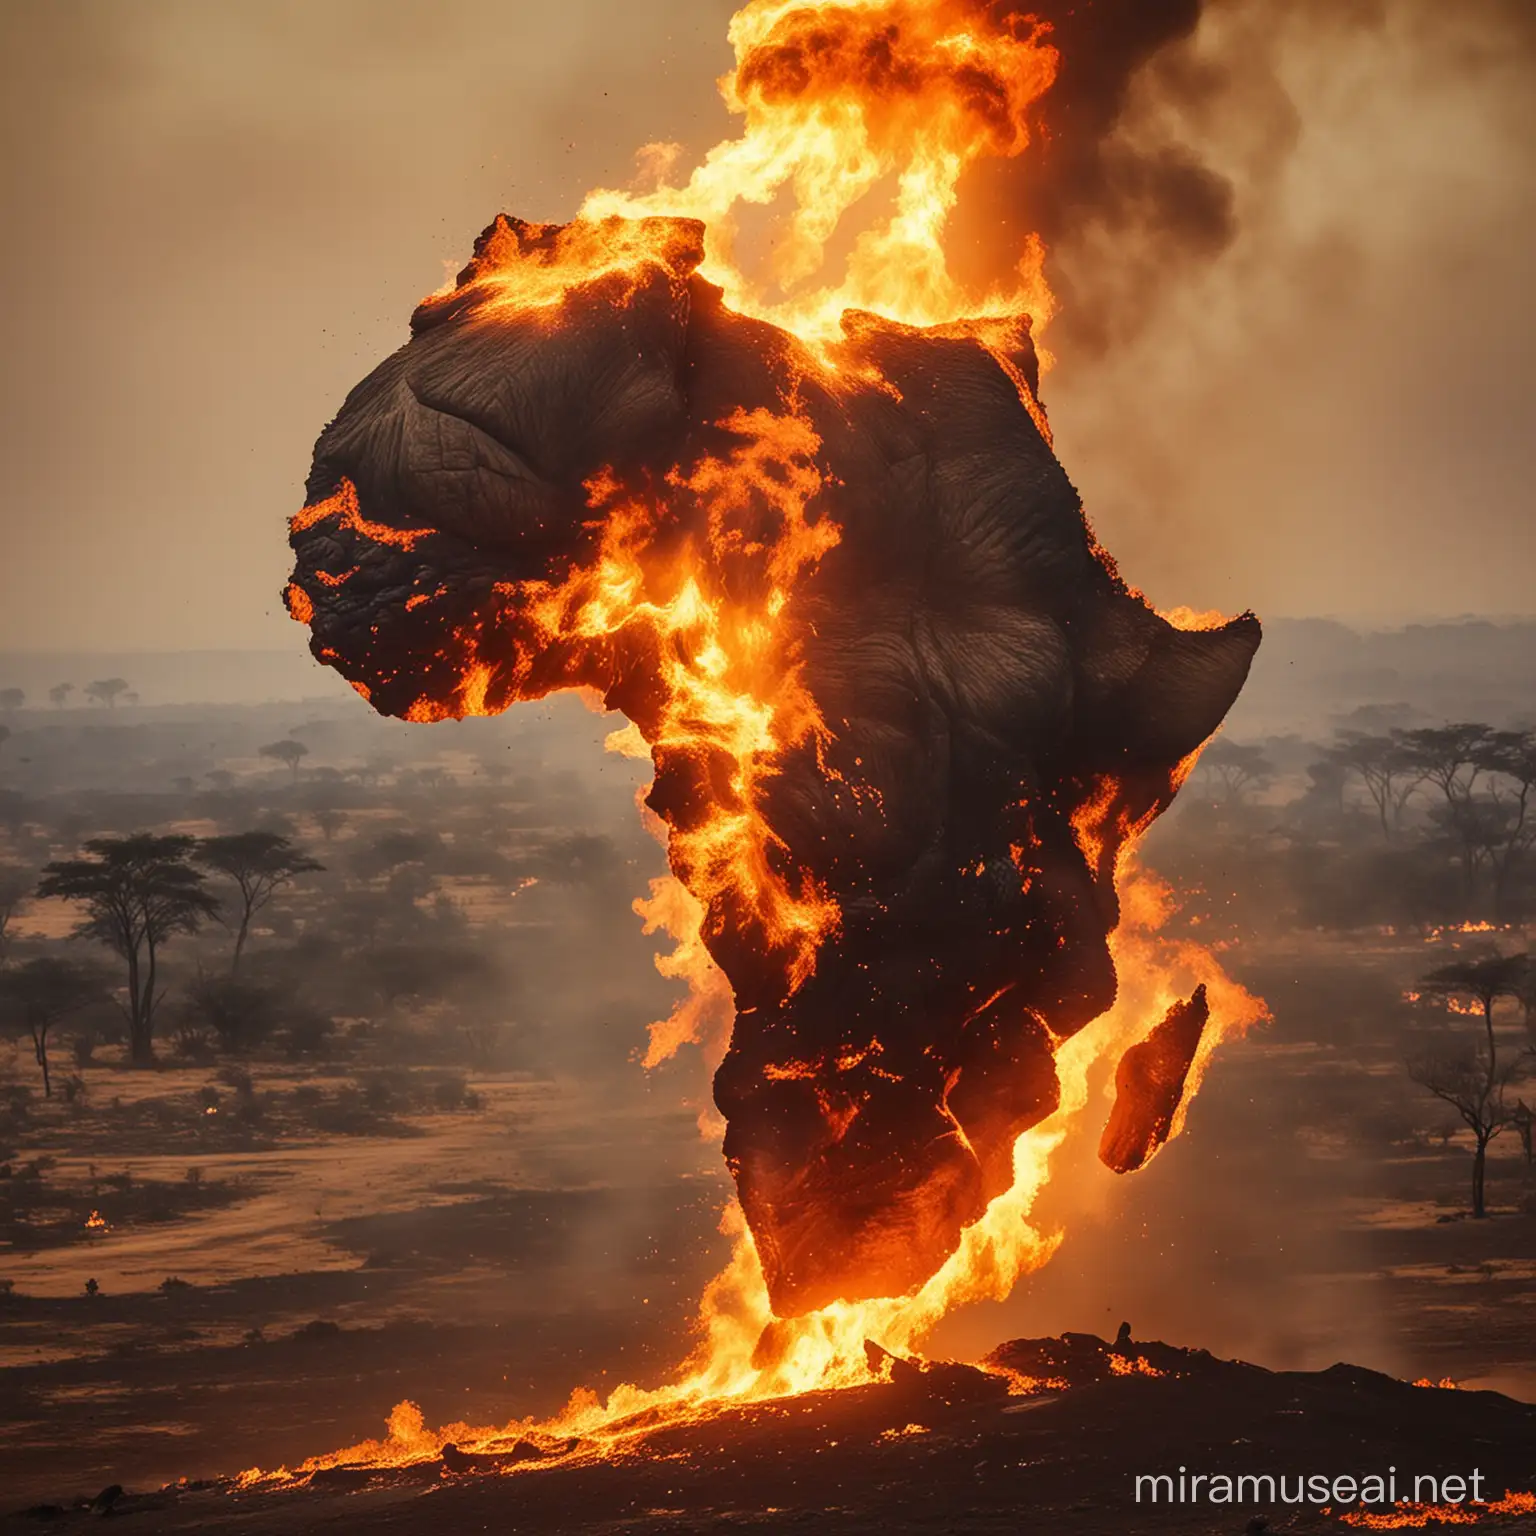 Africa rising like a burning Phoenix 